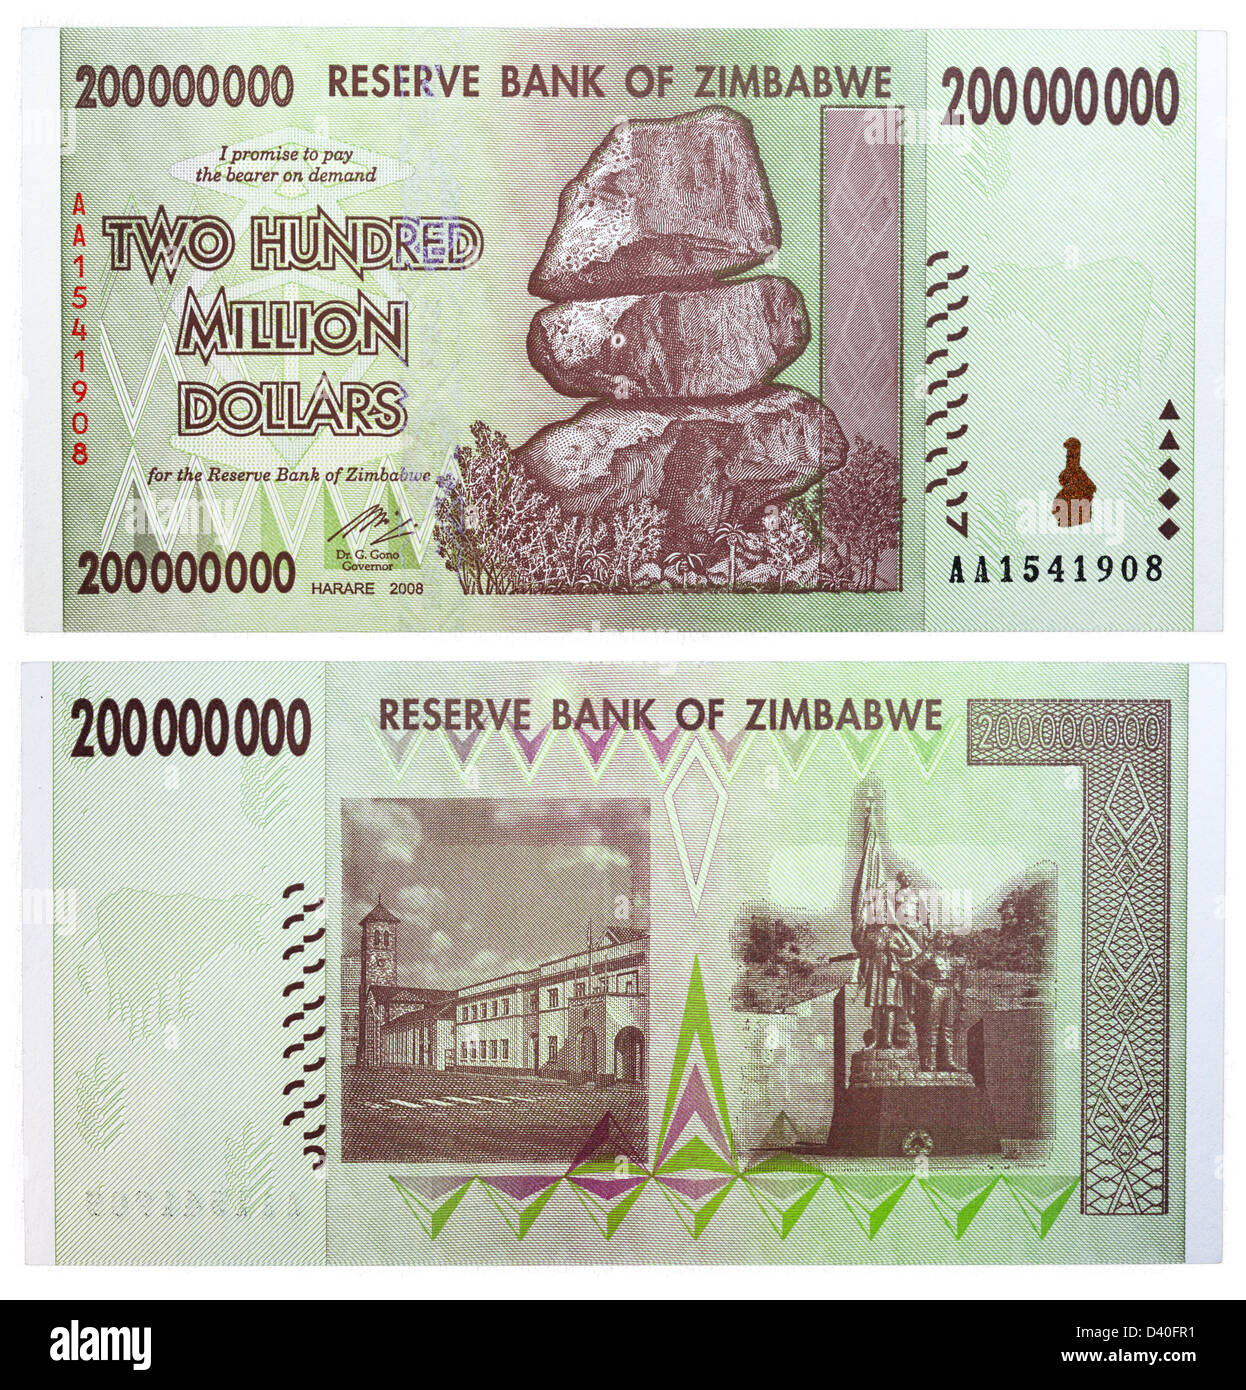 200 Million Dollars banknote, Chiremba Balancing Rocks, Zimbabwe, 2008 Stock Photo